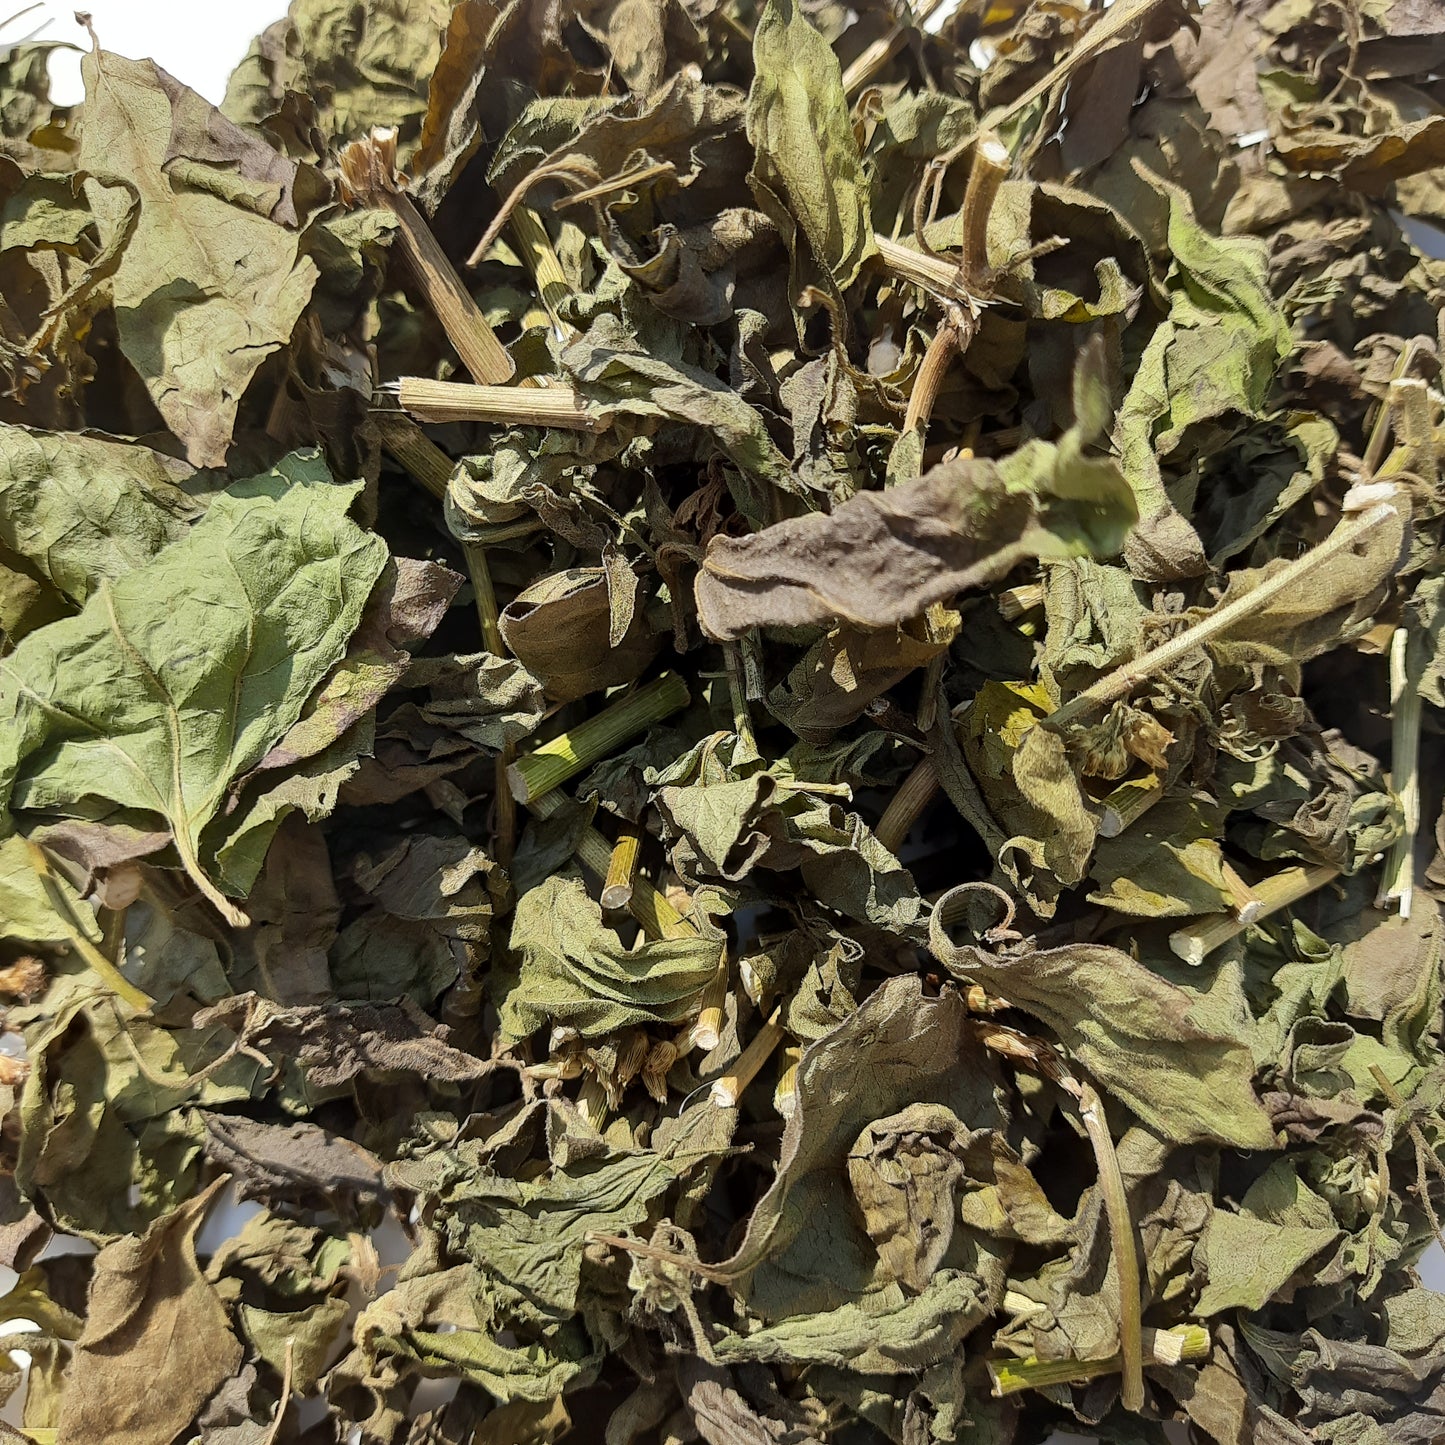 Calea Zacatechchi Mexican Dream Herbs Organic Tea | Ceylon Herbs